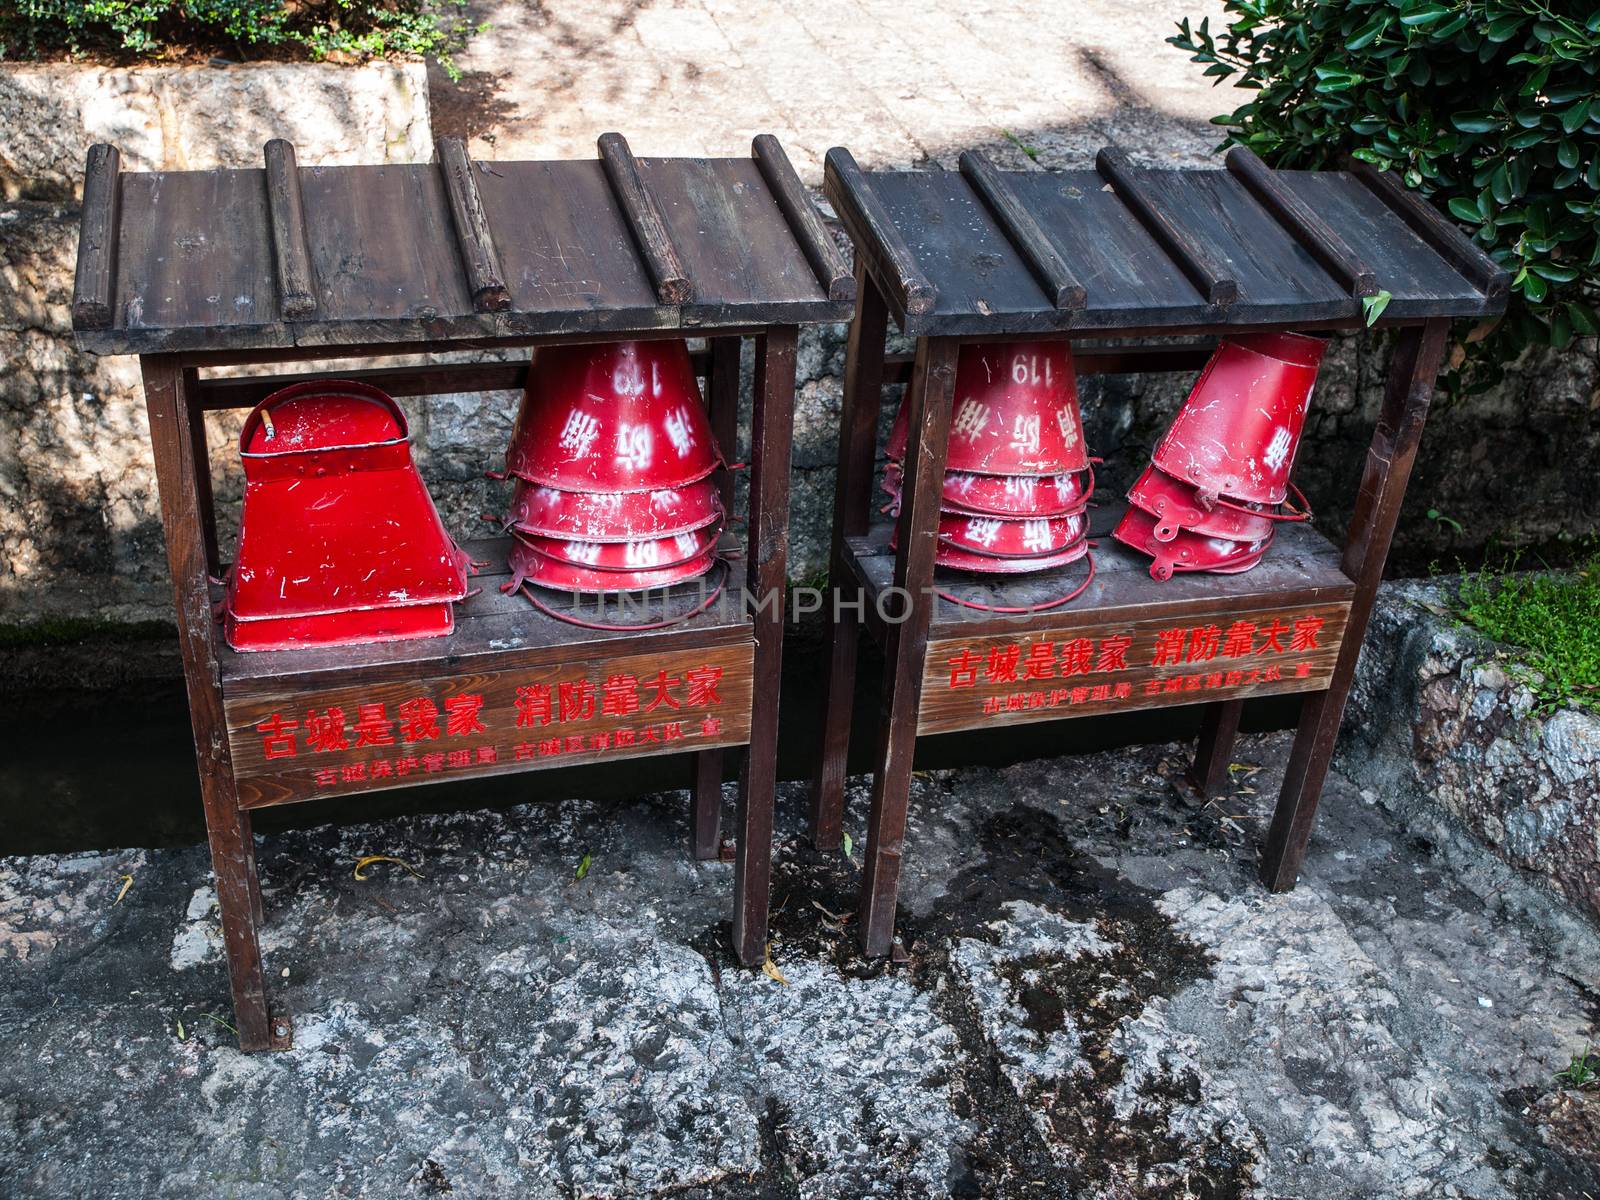 Fire buckets on the street (Lijiang, Yunnan, China)